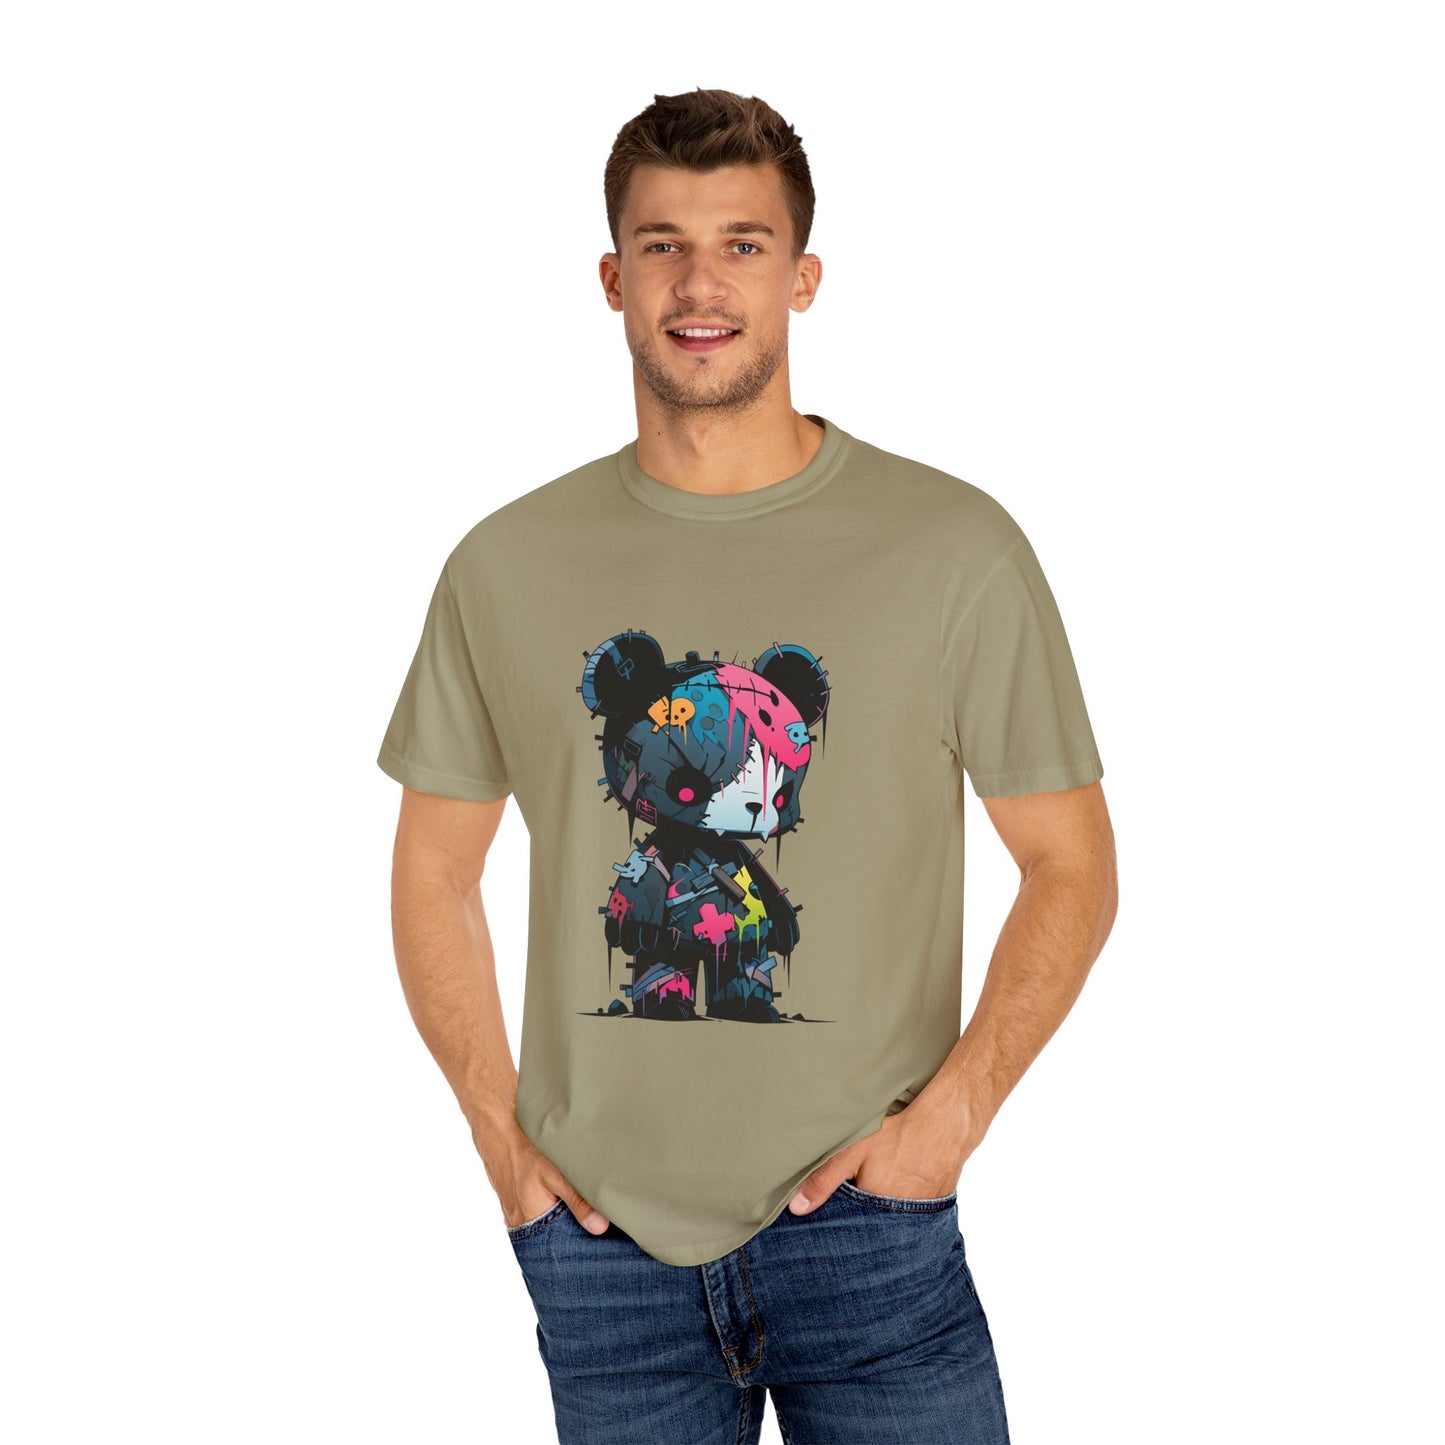 Hip Hop Teddy Bear Graphic Unisex Garment-dyed T-shirt Cotton Funny Humorous Graphic Soft Premium Unisex Men Women Khaki T-shirt Birthday Gift-48